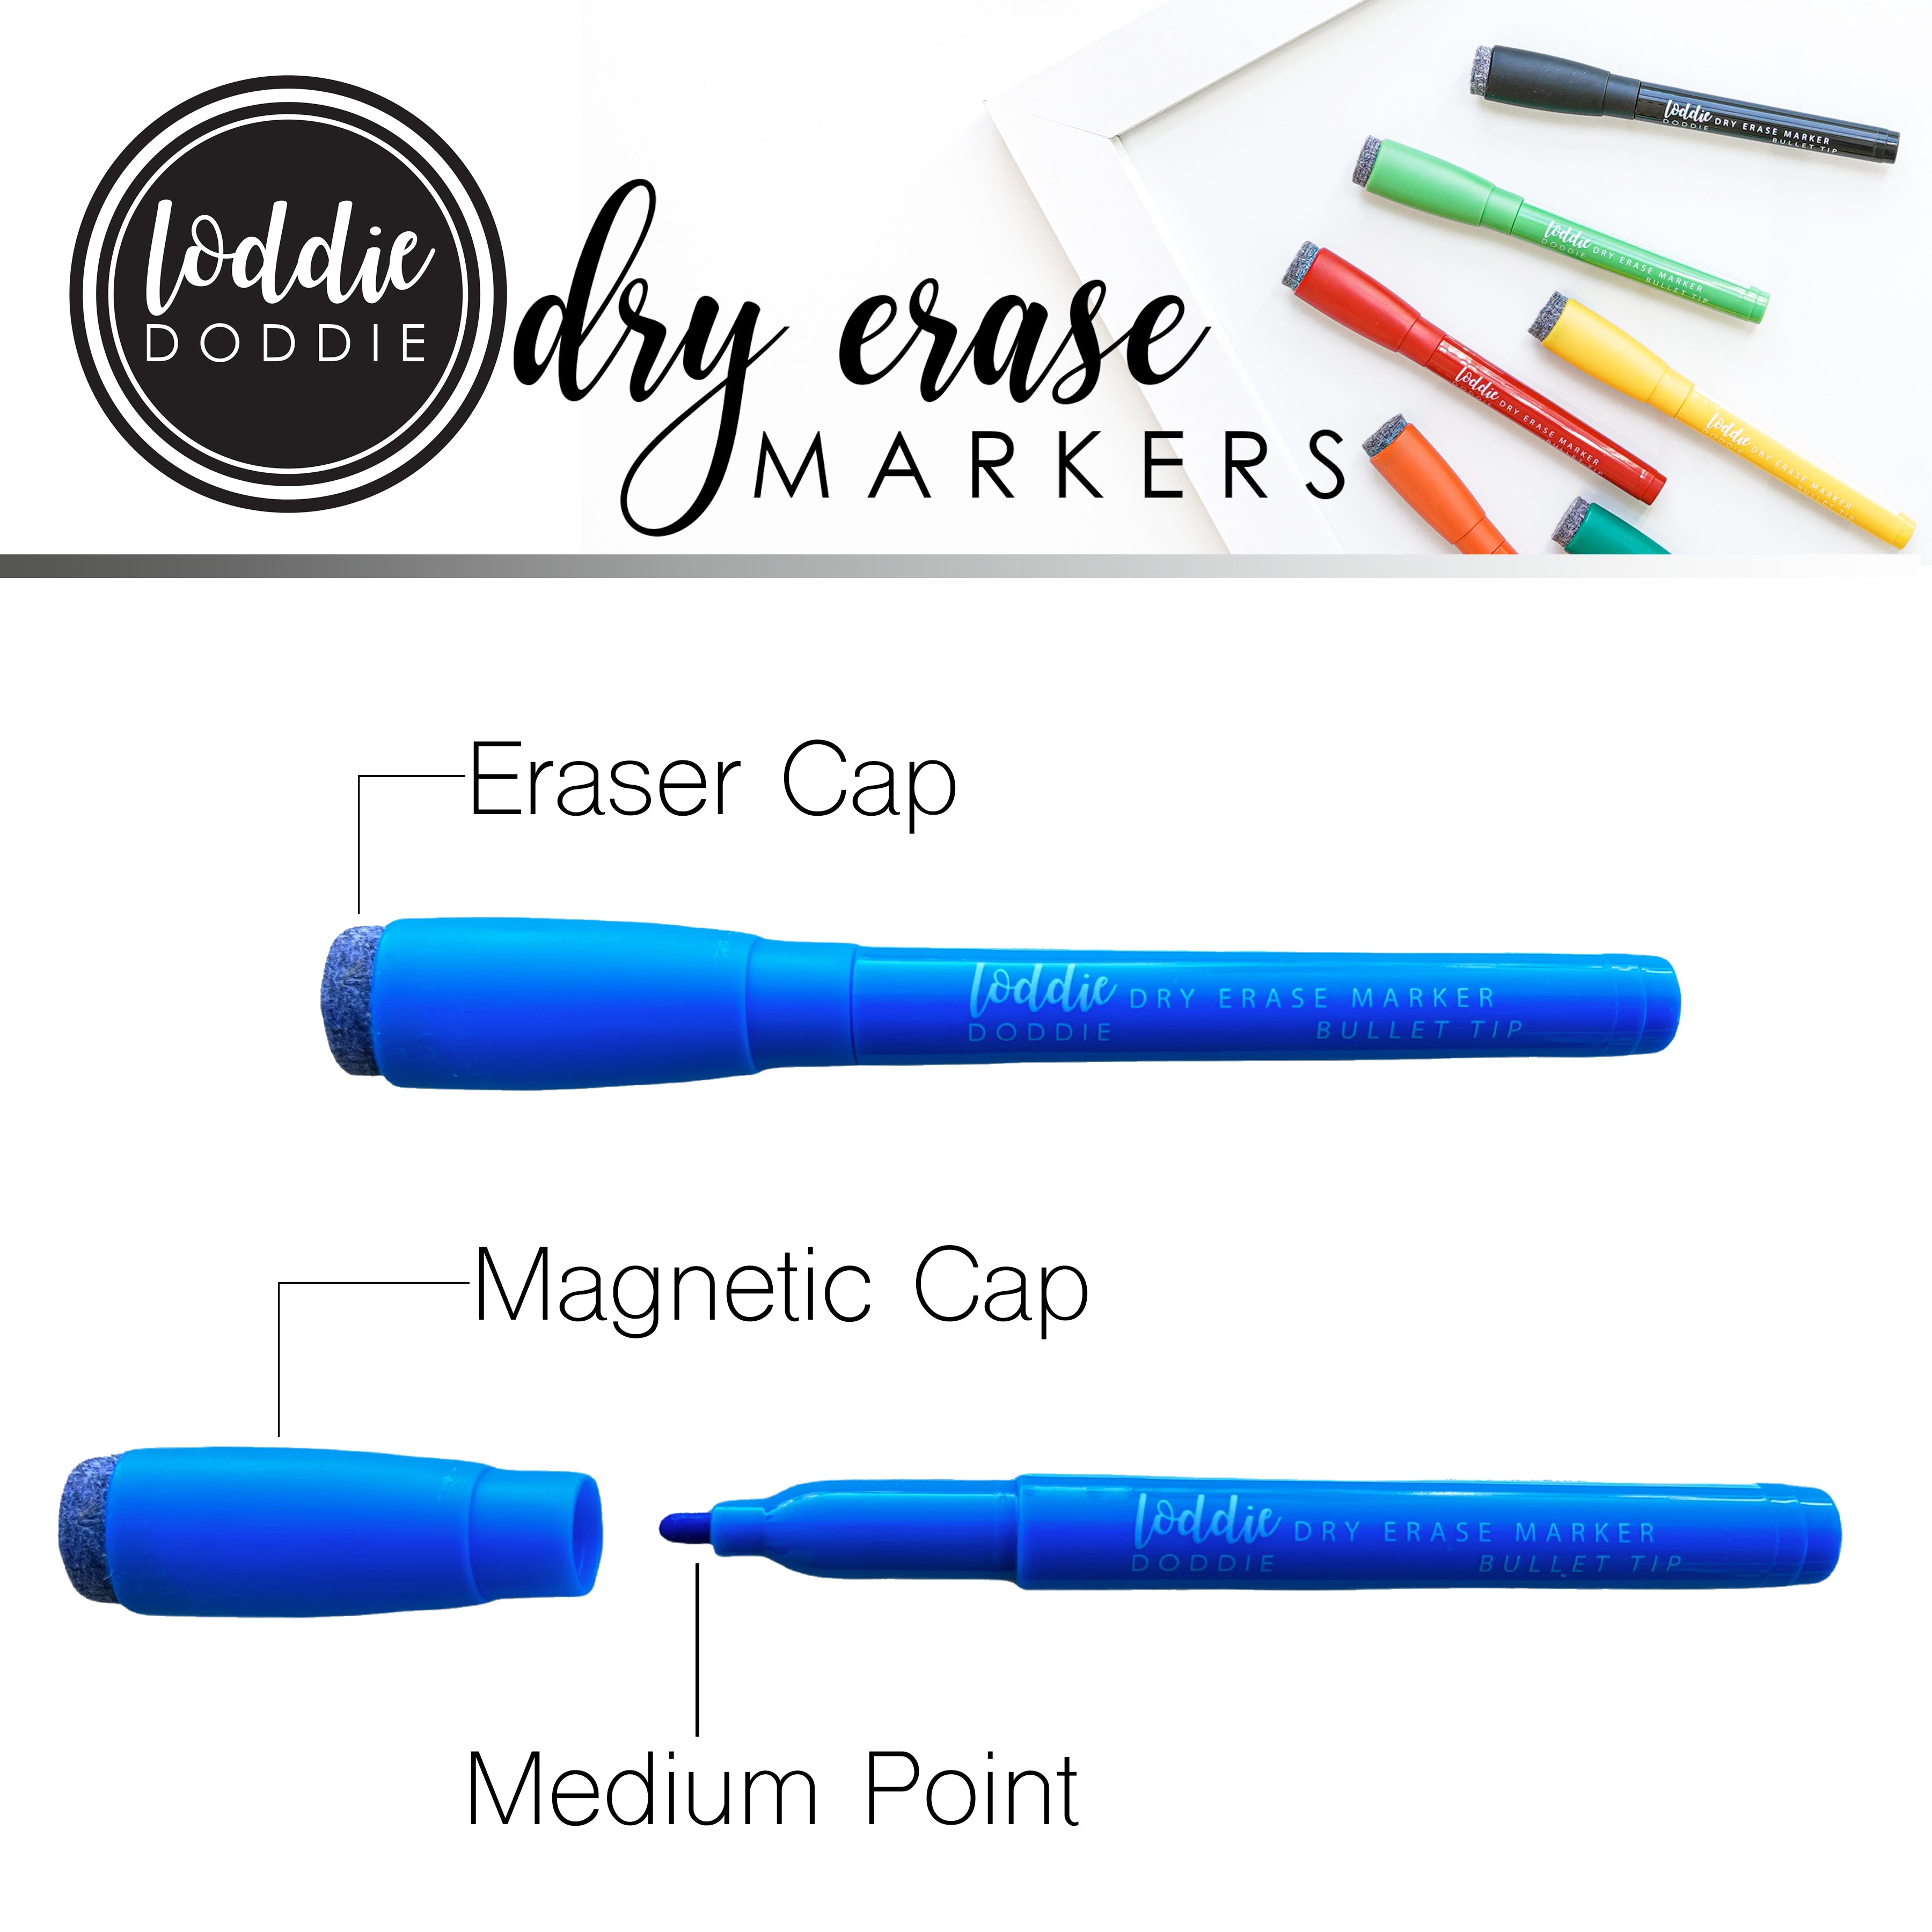 Mr. Pen- Dry Erase Erasers, 24 Pack, Dry Erasers, Dry Erase Board Erasers,  White Board Erasers, Whiteboard Erasers - Mr. Pen Store